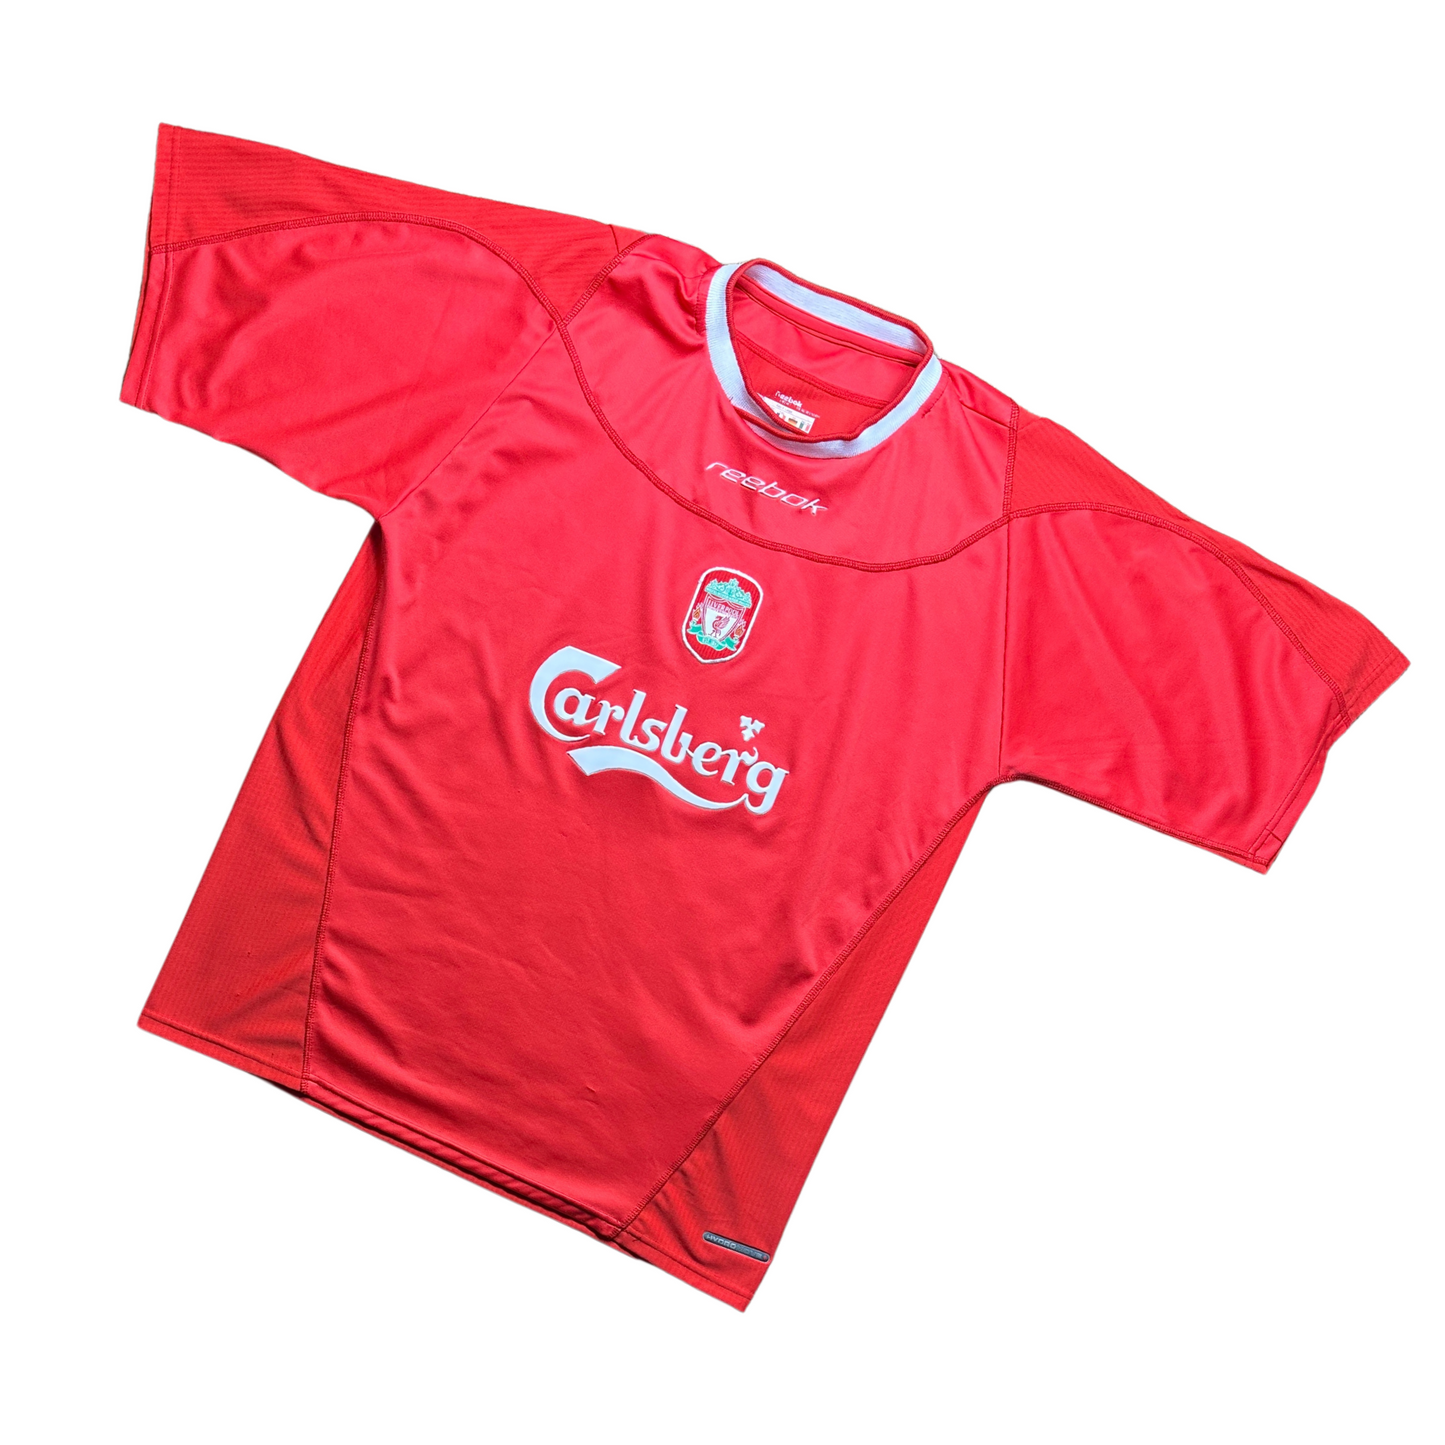 Liverpool 2003/2004 Home Football Shirt